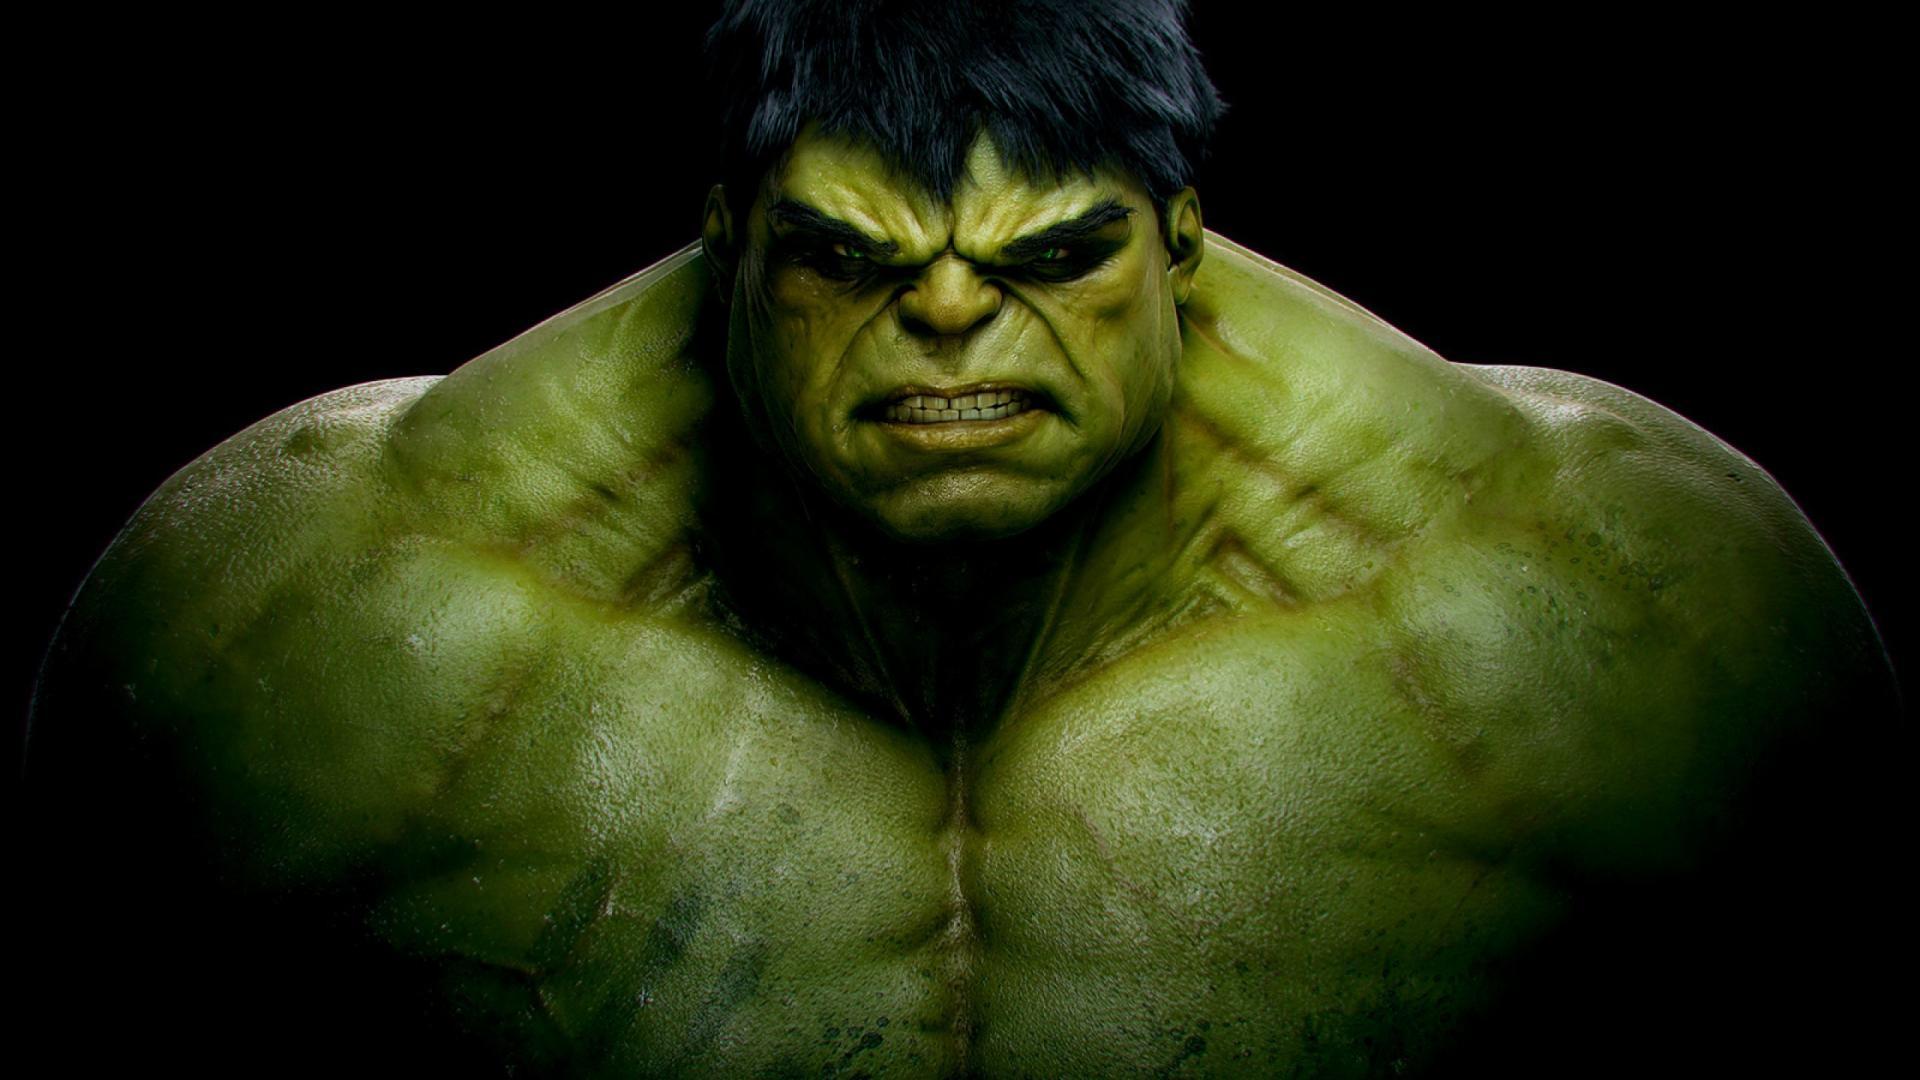 Download Incredible Hulk in 4K Quality Wallpaper | Wallpapers.com